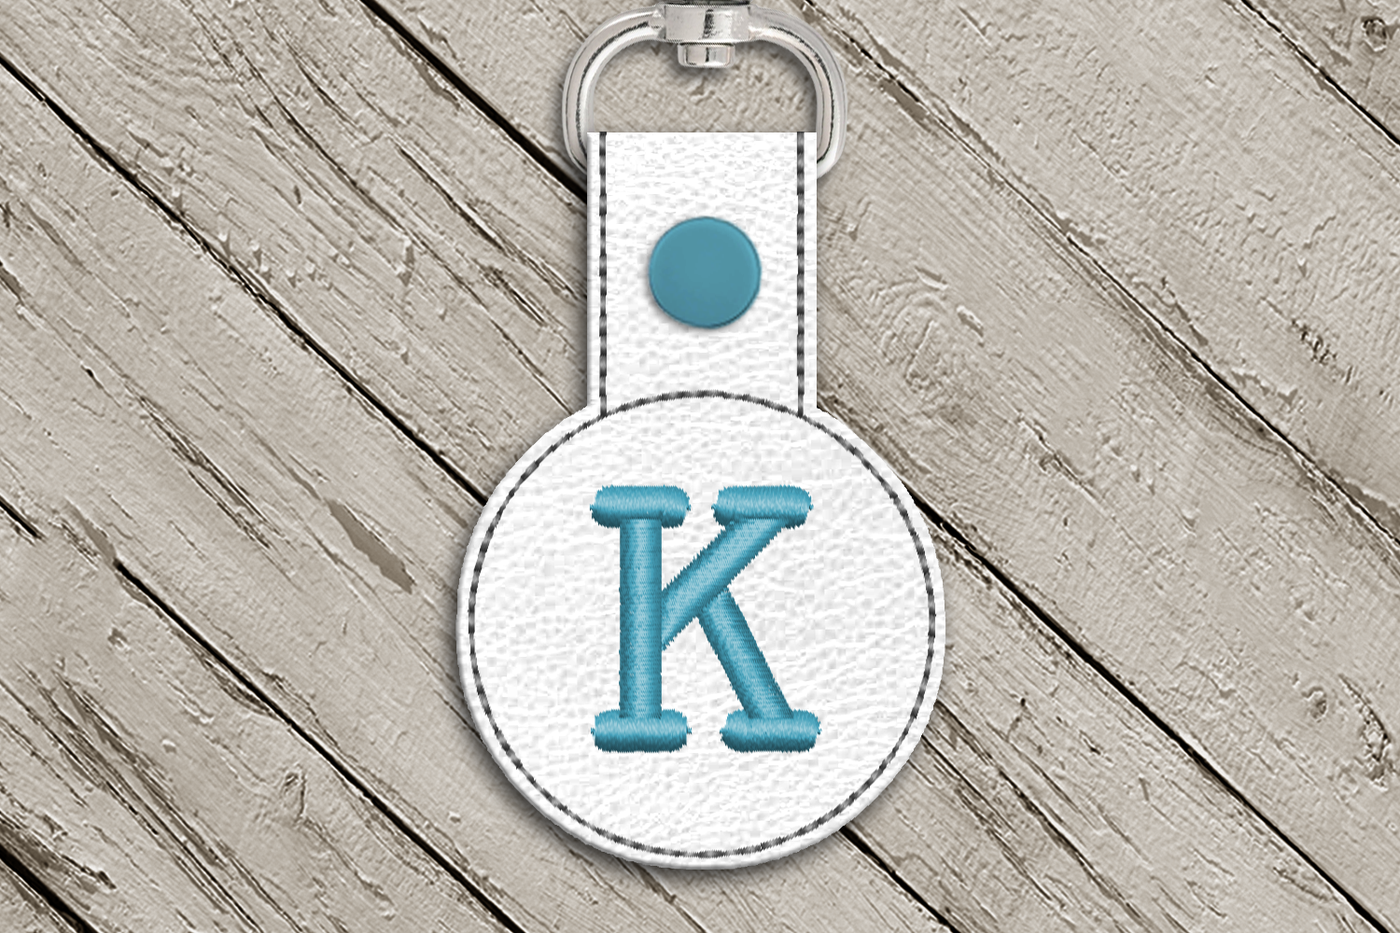 Letter K in the hoop key fob design